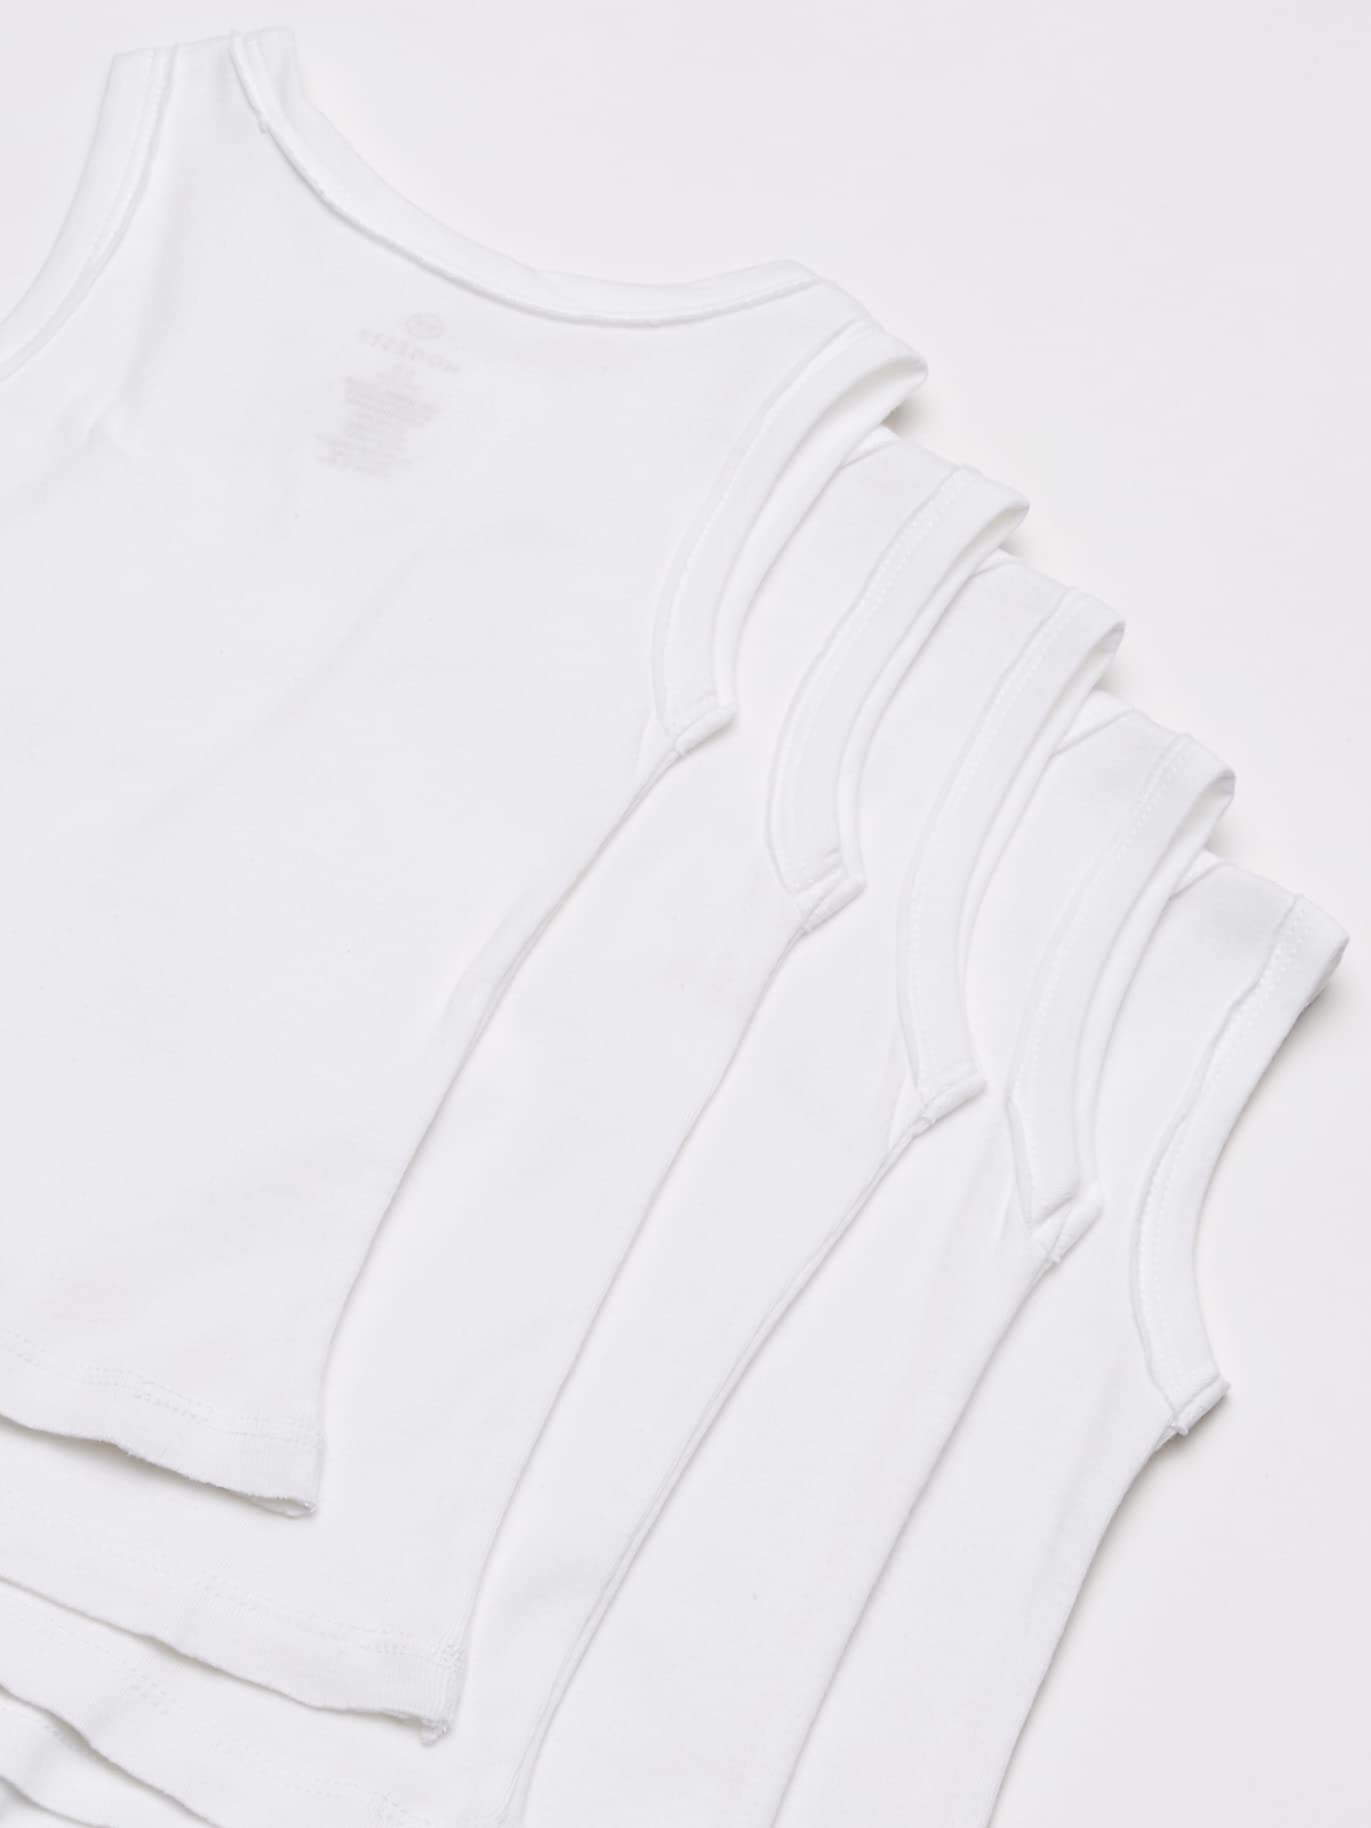 HonestBaby Muscle Tee Sleeveless T-Shirt Multipack Organic Cotton for Infant Baby & Toddler Unisex Boys & Girls